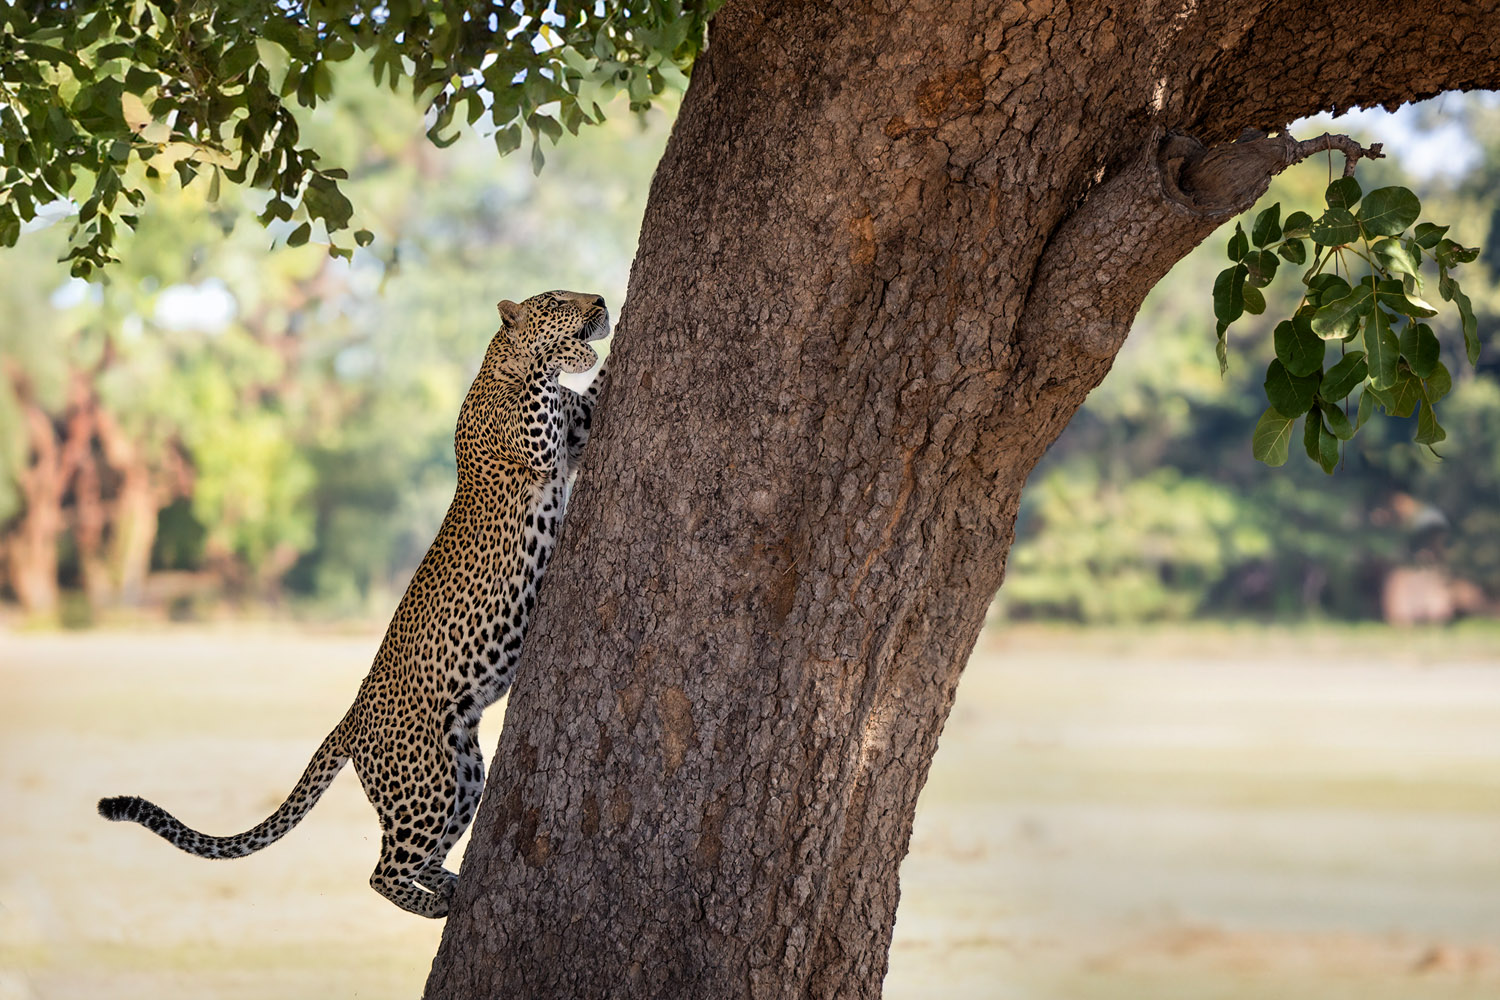 Leopard klettert in Baum, Sambia Fotoreise